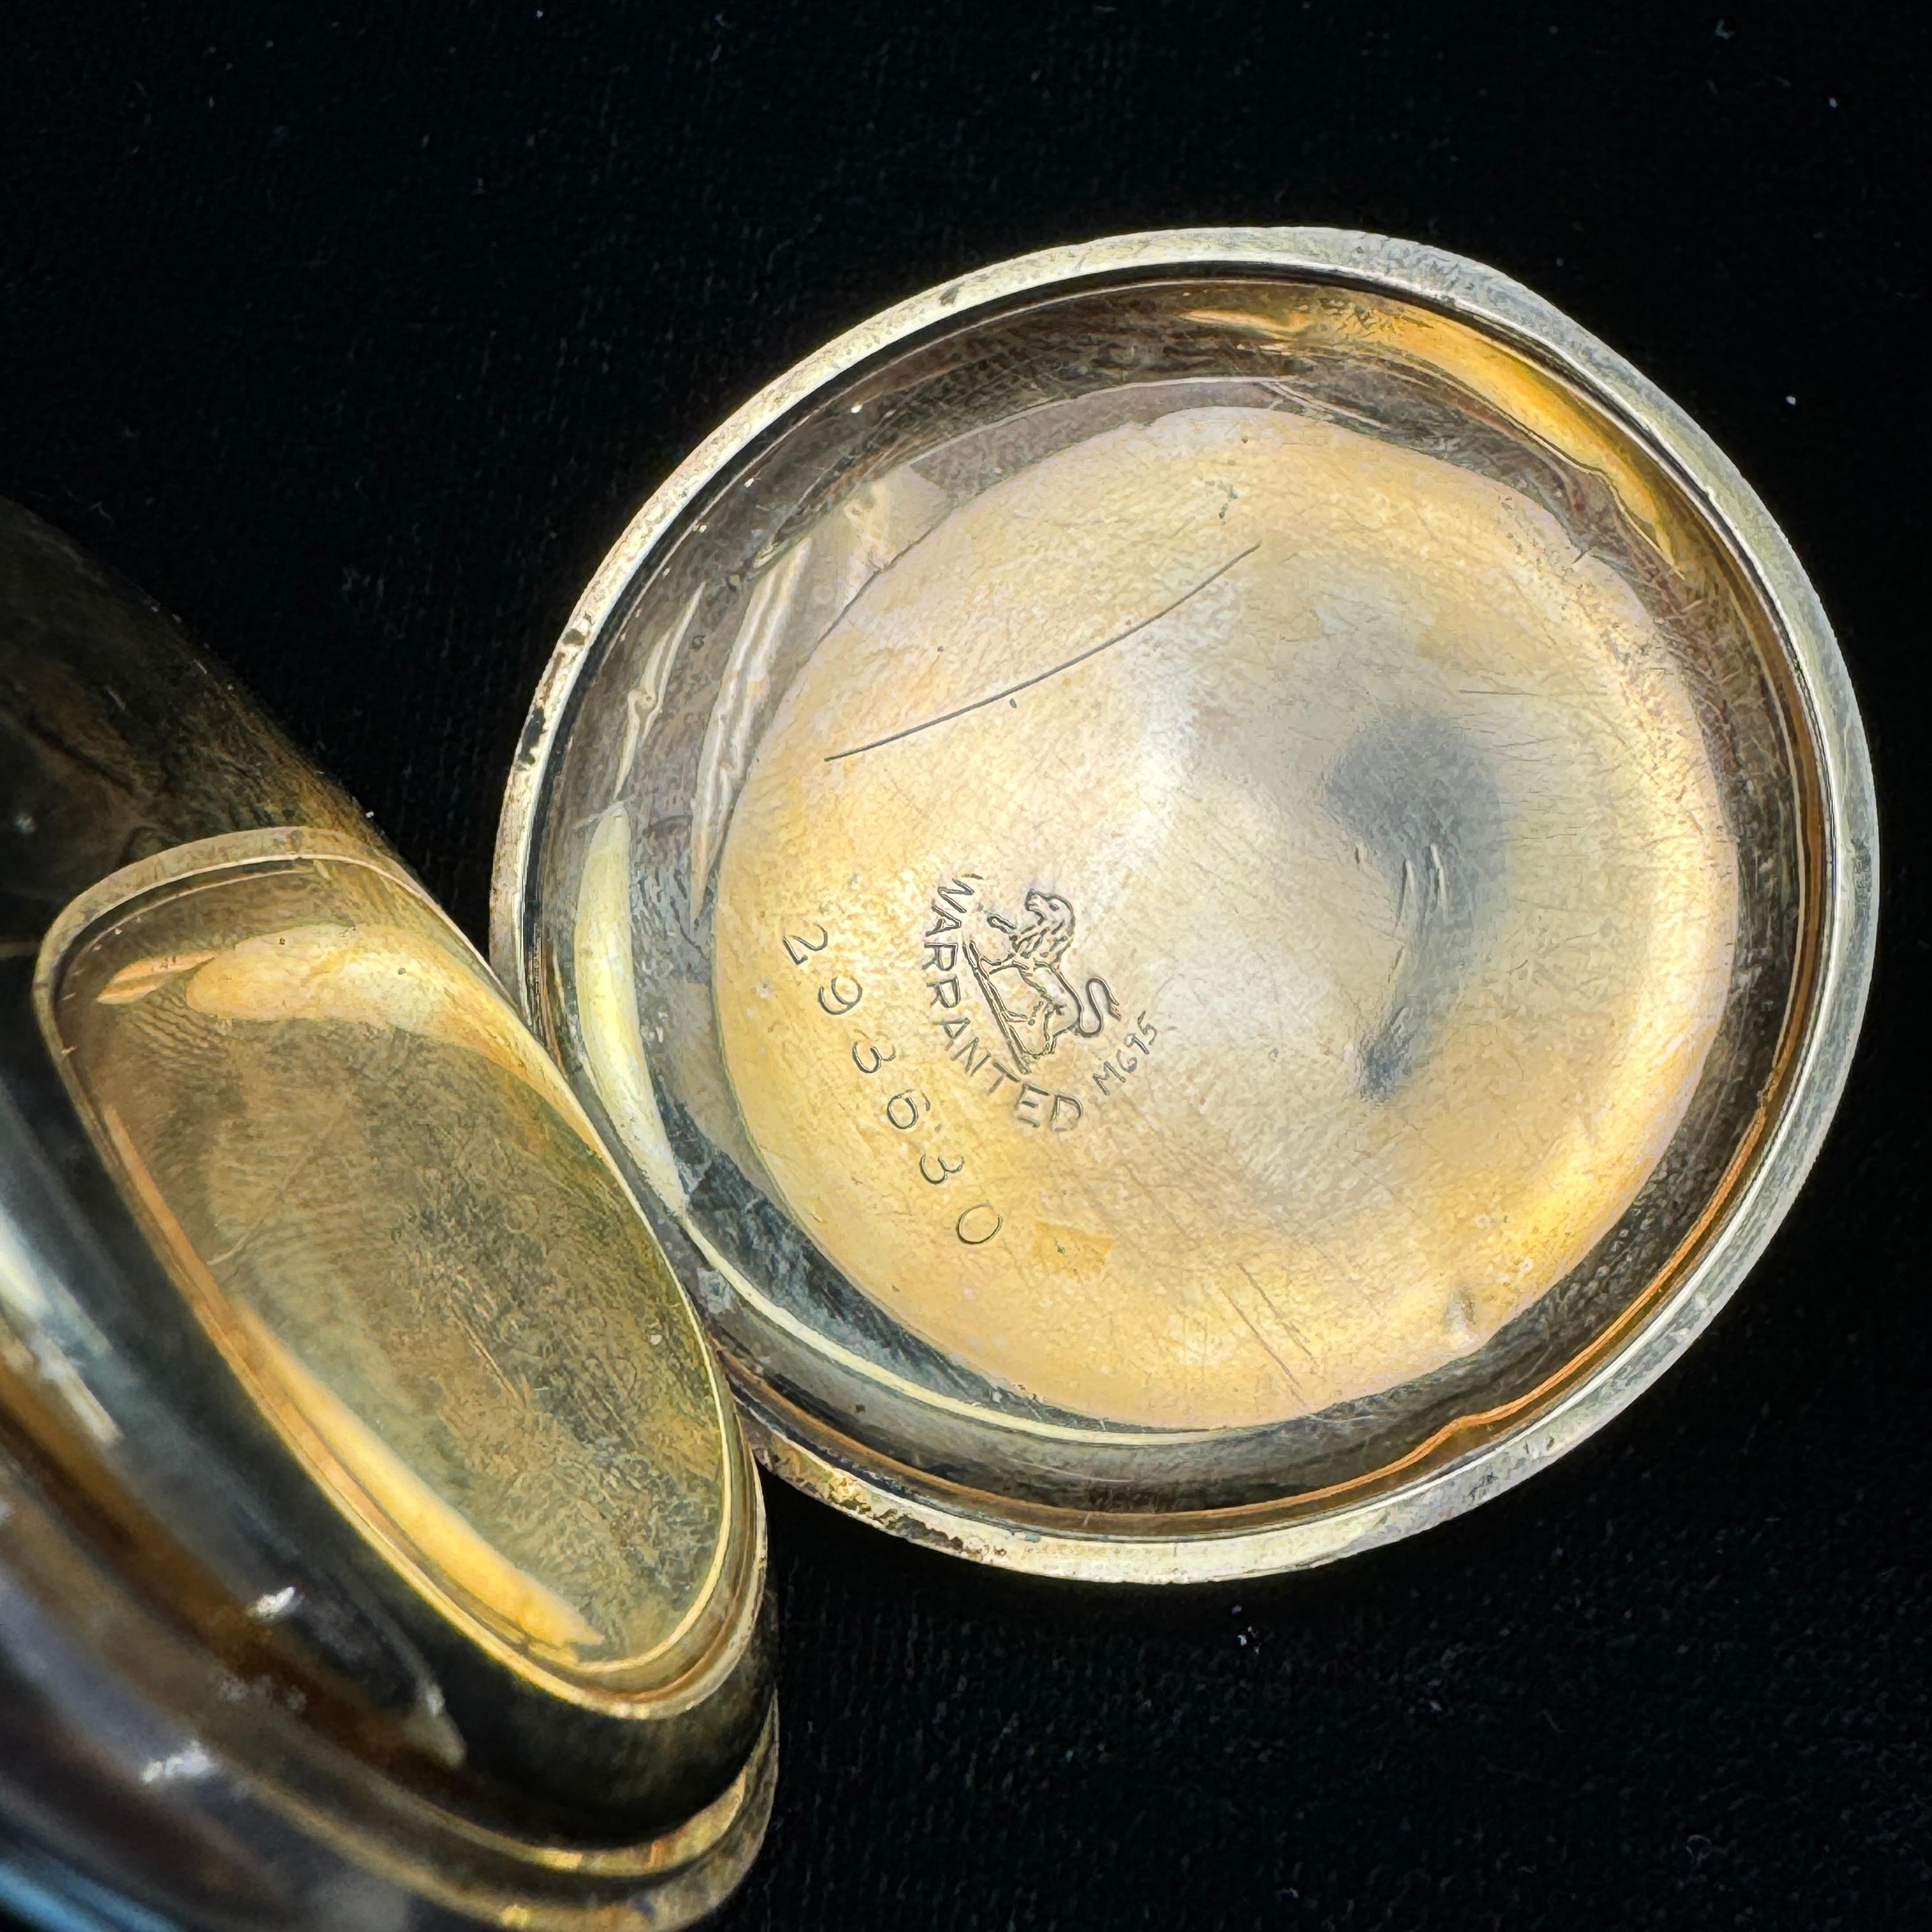 Circa 1899 15-jewel Elgin model 2 covered pocket watch